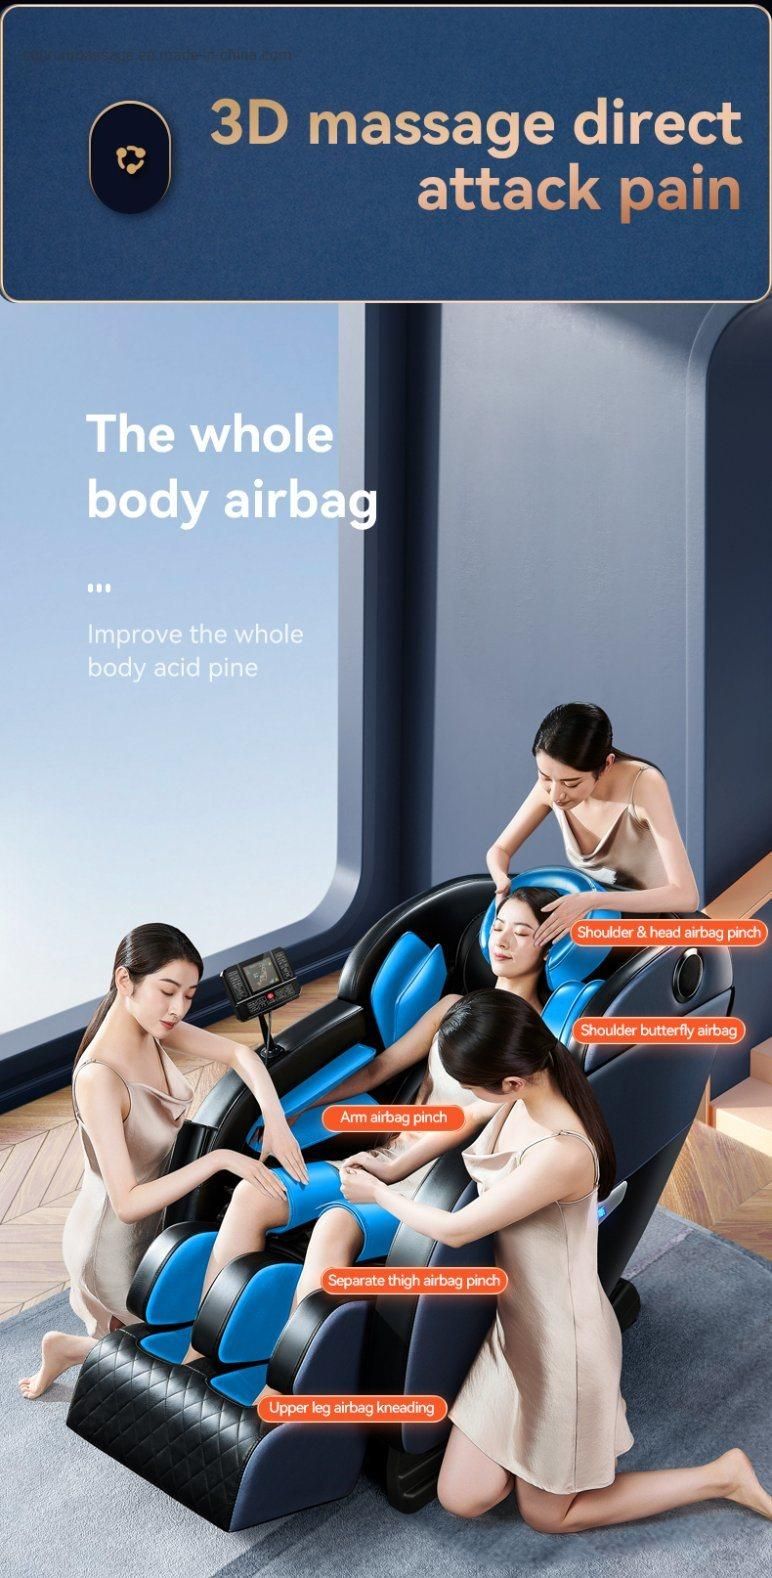 Intelligent Cheap Massage Chair Zero Gravity with Big Screen Controller